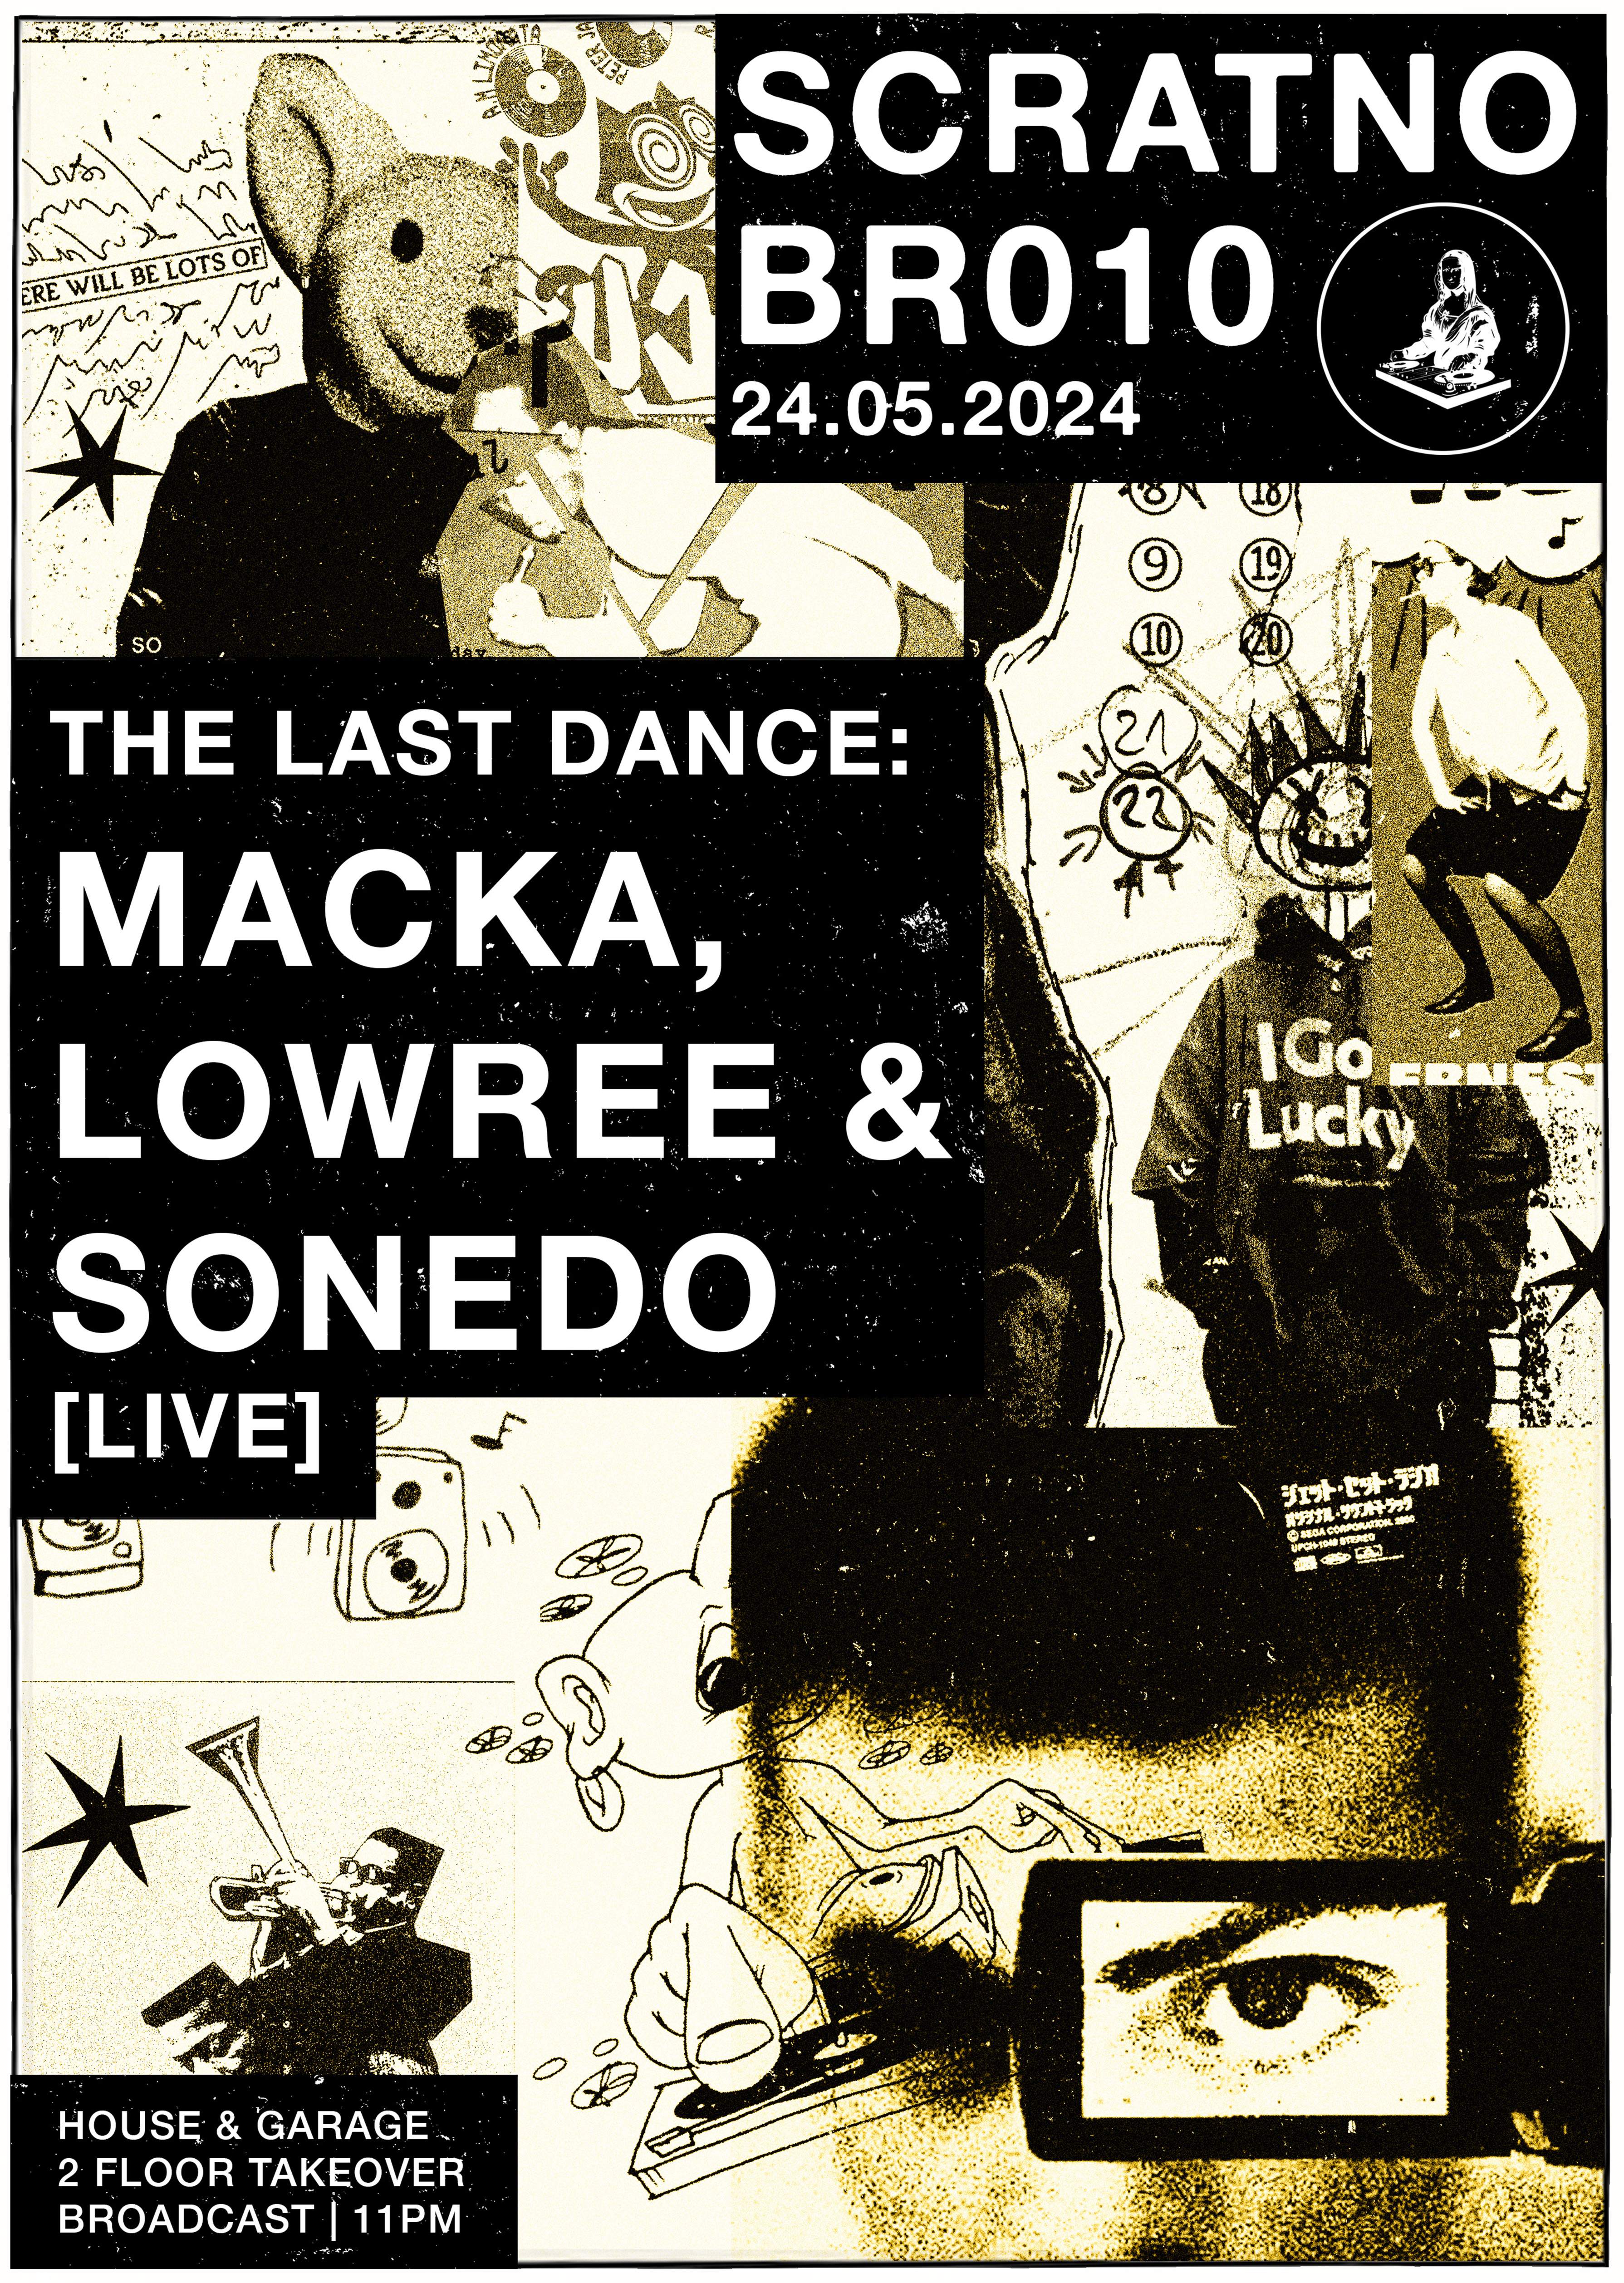 Scratno BR010: THE LAST DANCE with Macka, Lowree & Sonedo [LIVE] - Página frontal